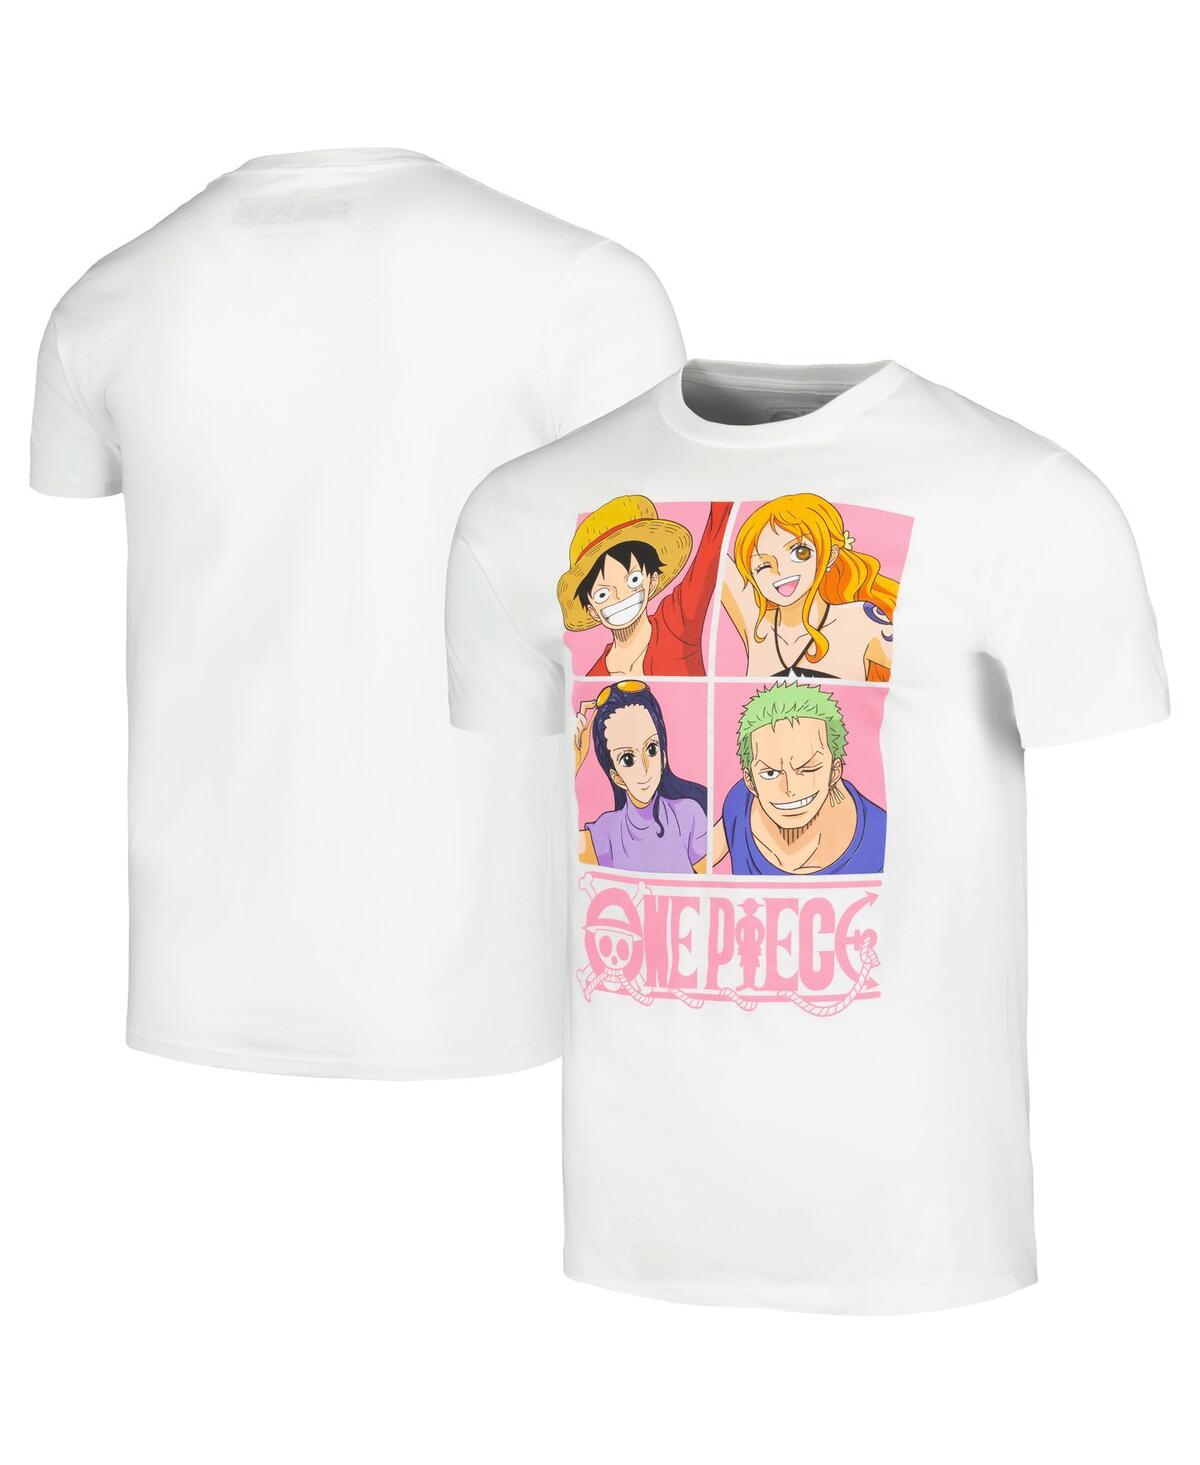 Men's White One Piece Graphic T-shirt - White